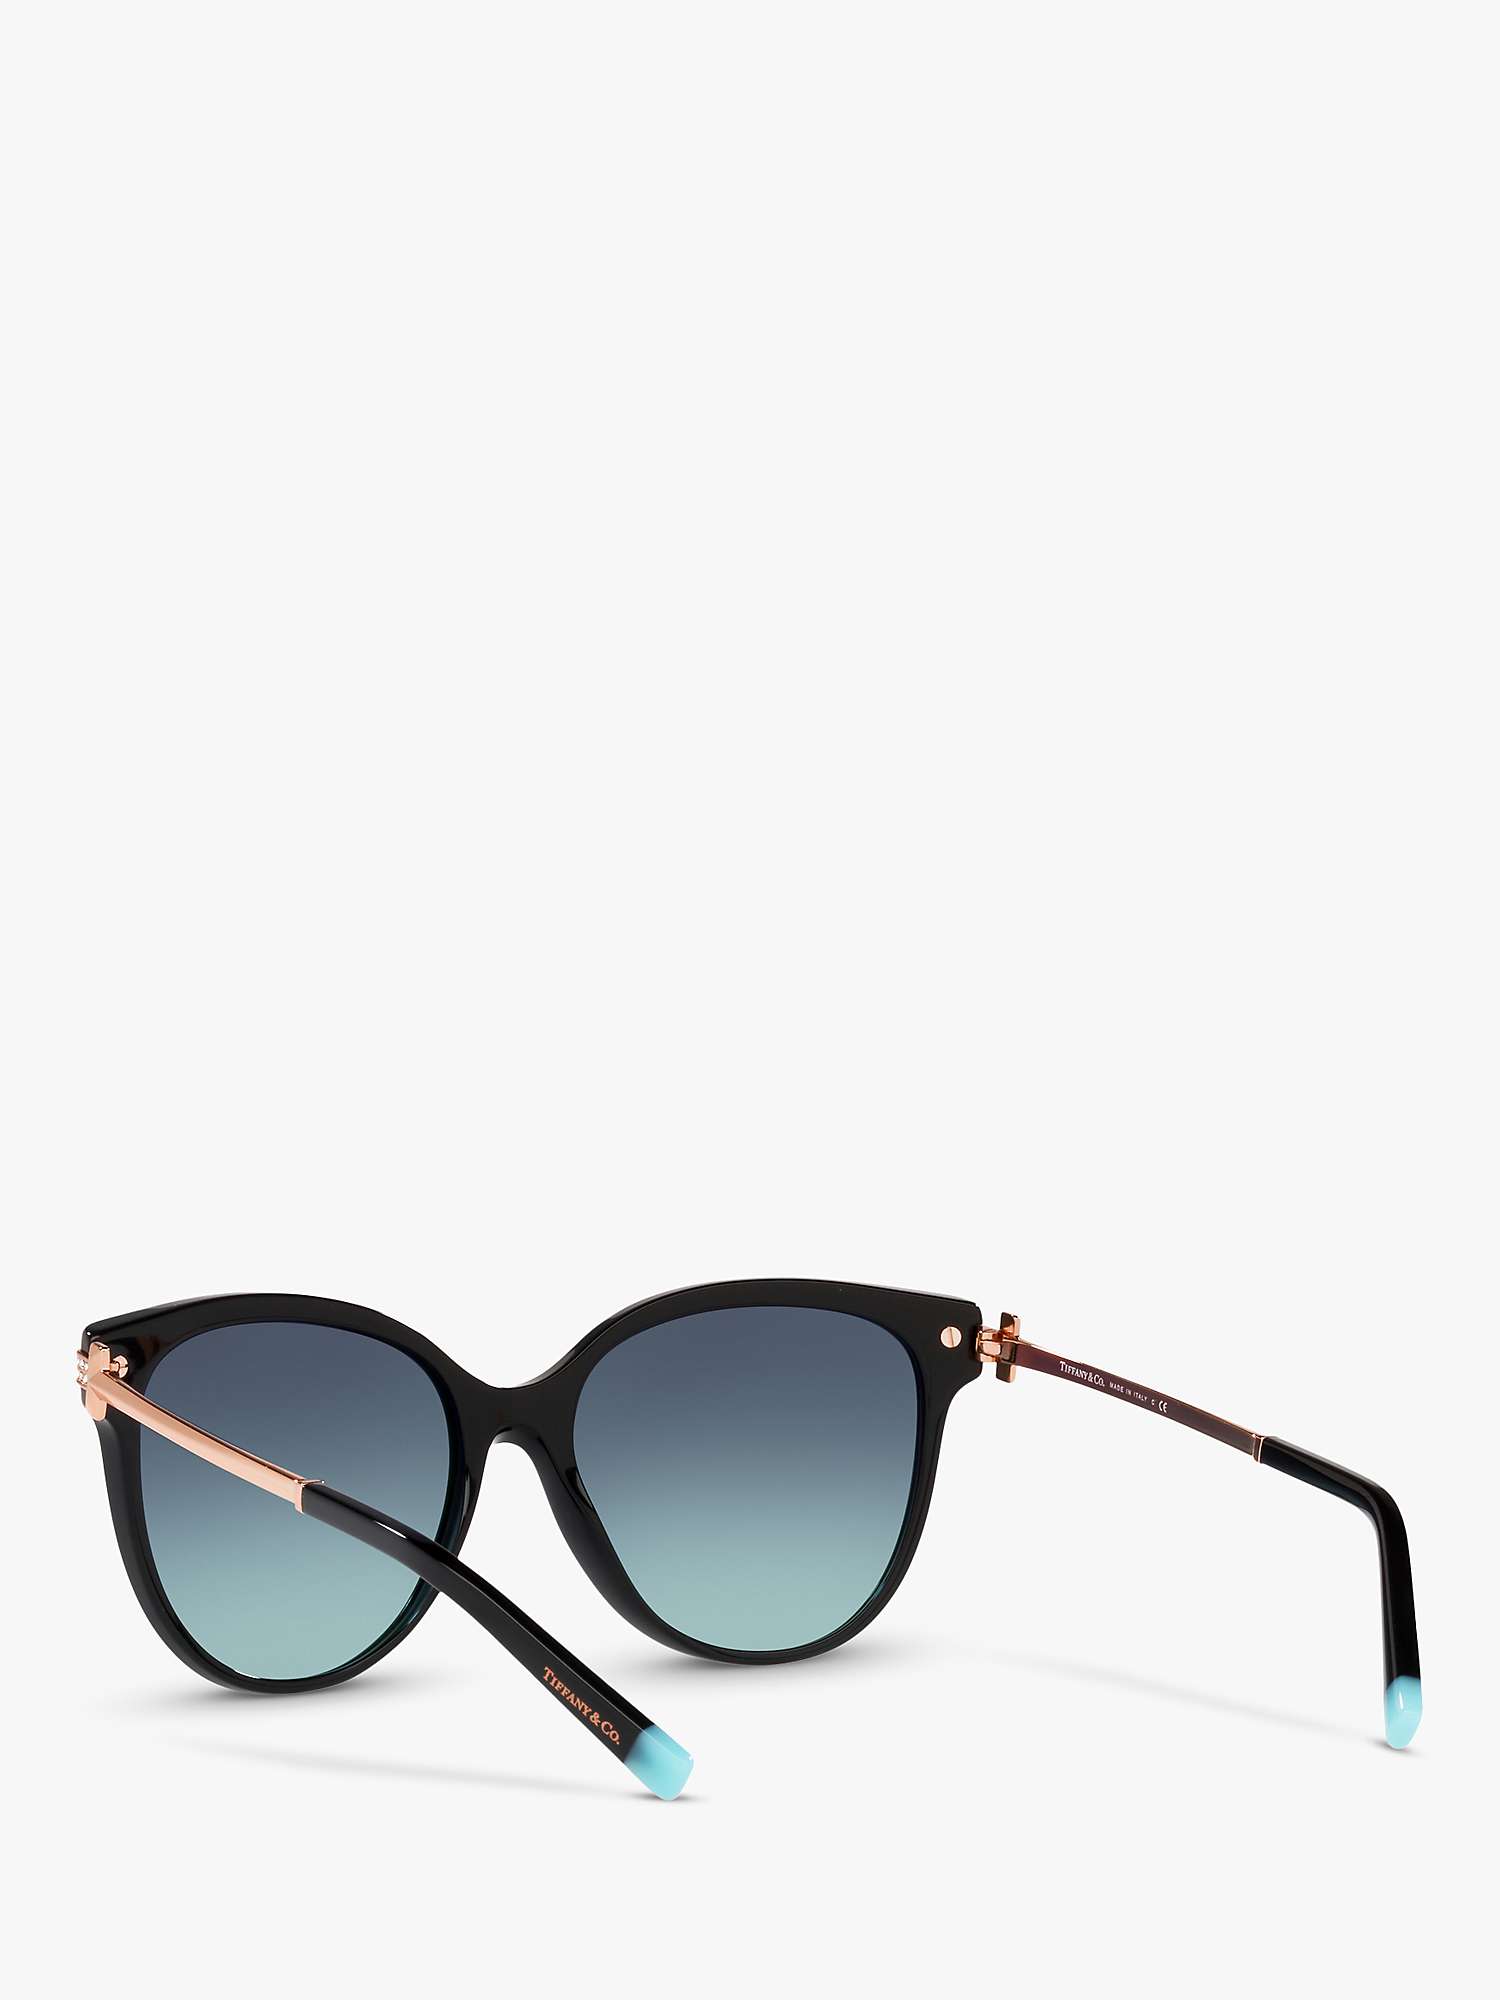 Tiffany & Co Womens Accessories Sunglasses Black Oval-frame Sunglasses in Blue 